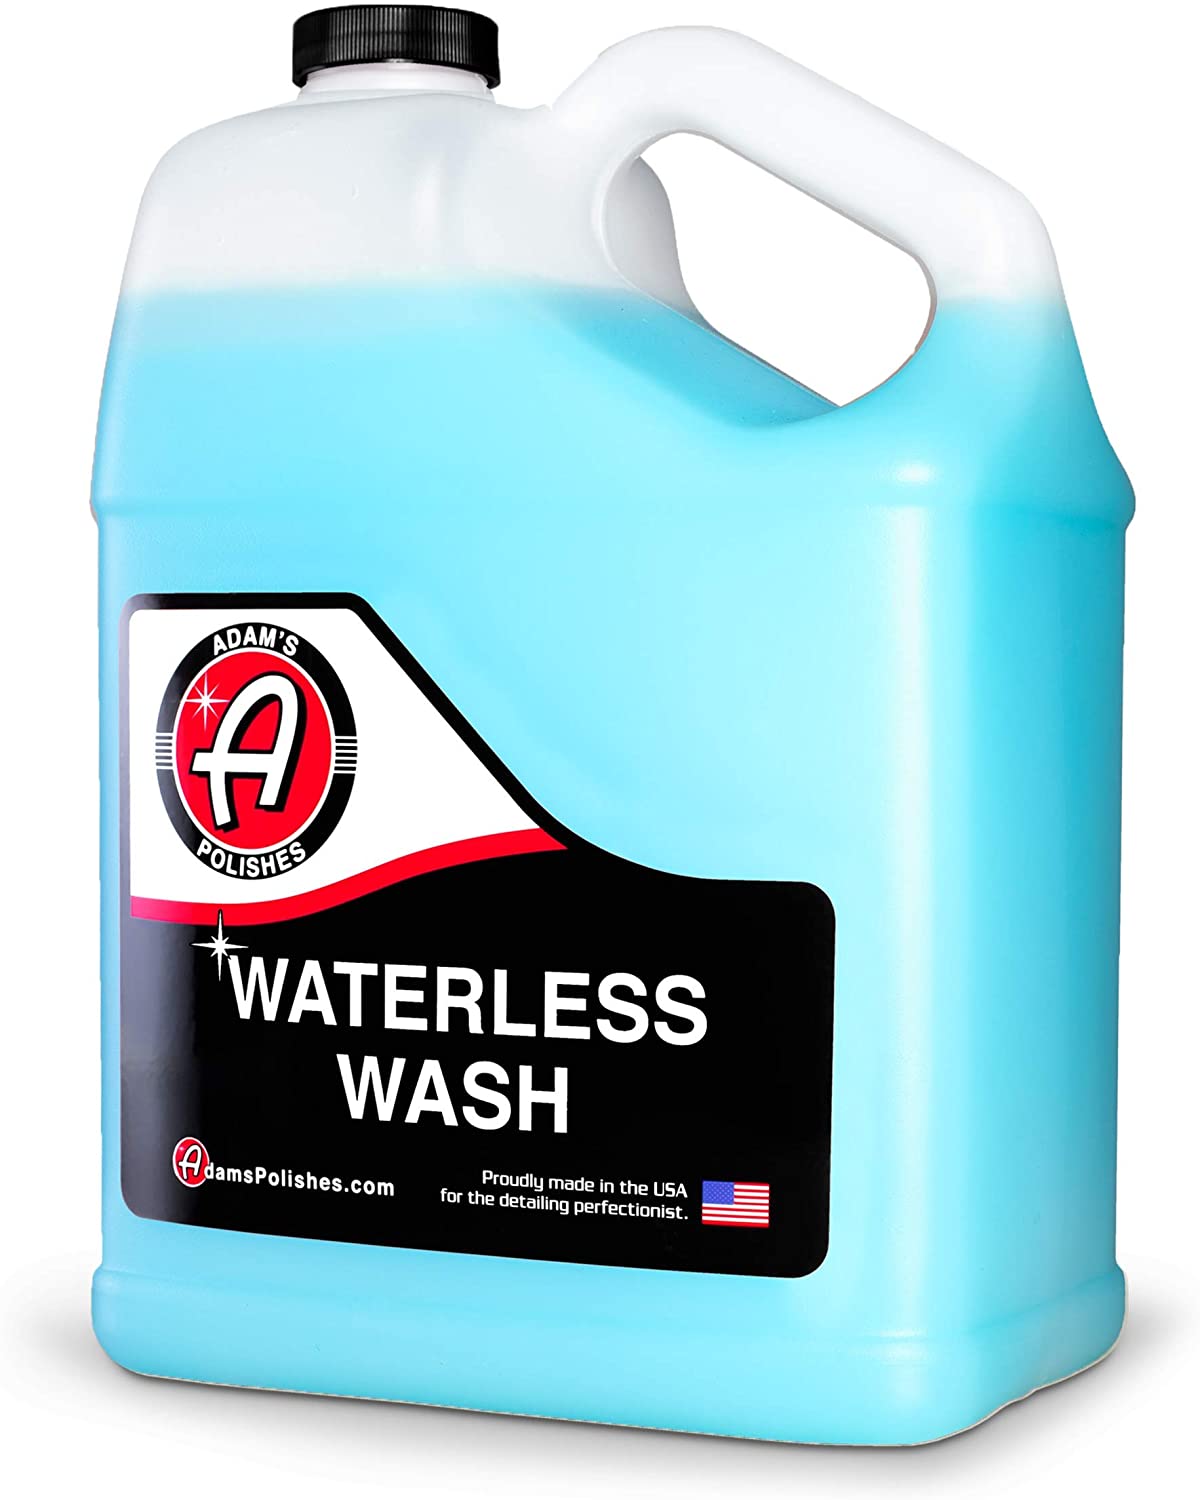 Adam's Polishes Waterless Wash & Towel